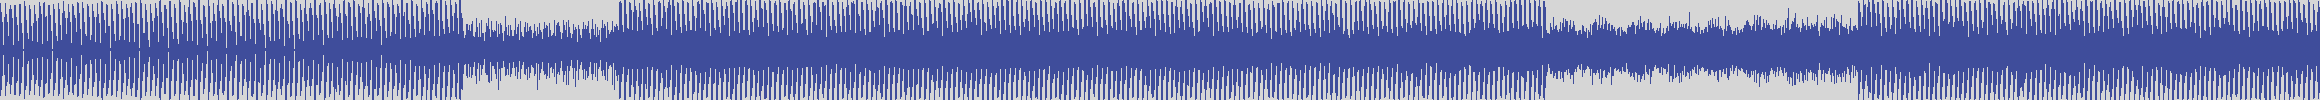 nf_boyz_records [NFY019] Abdel Kamut - Nice Piece [Arabian Tech Mix] audio wave form